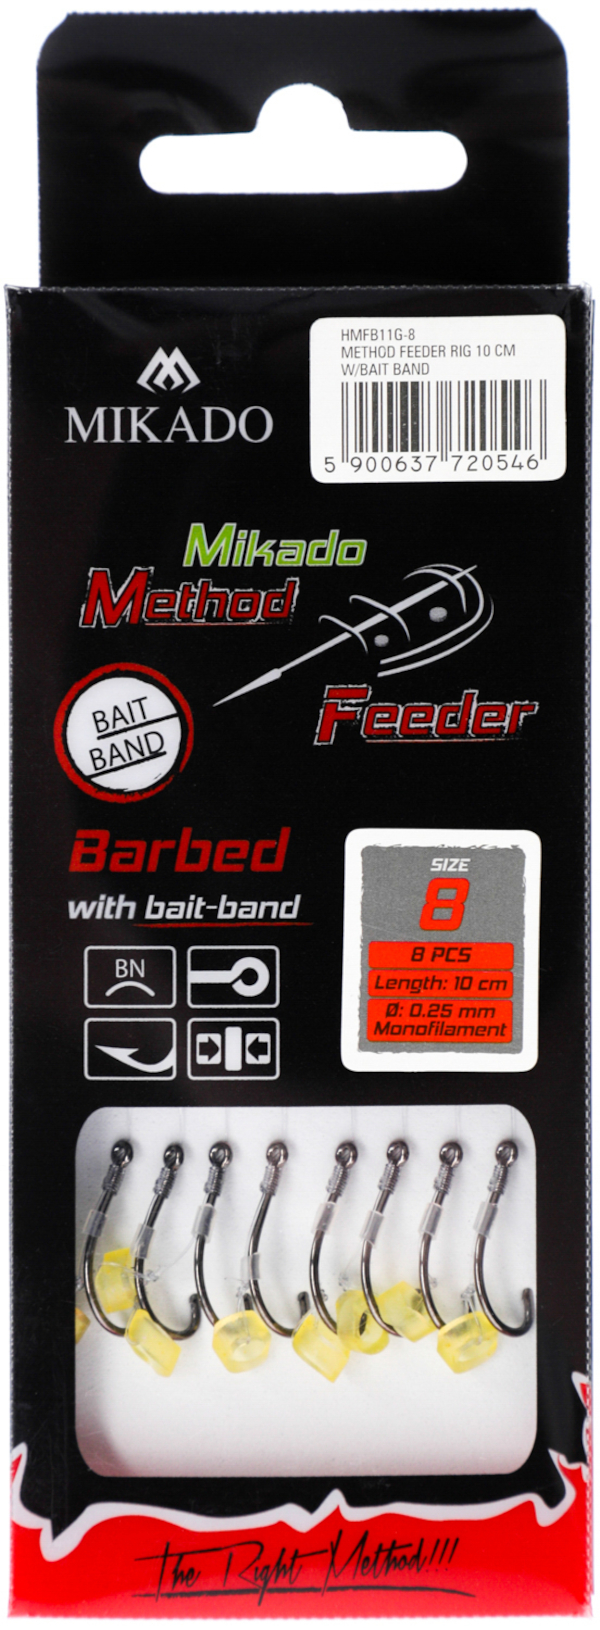 Mikado Method Feeder Rig With Baitband 8 pieces